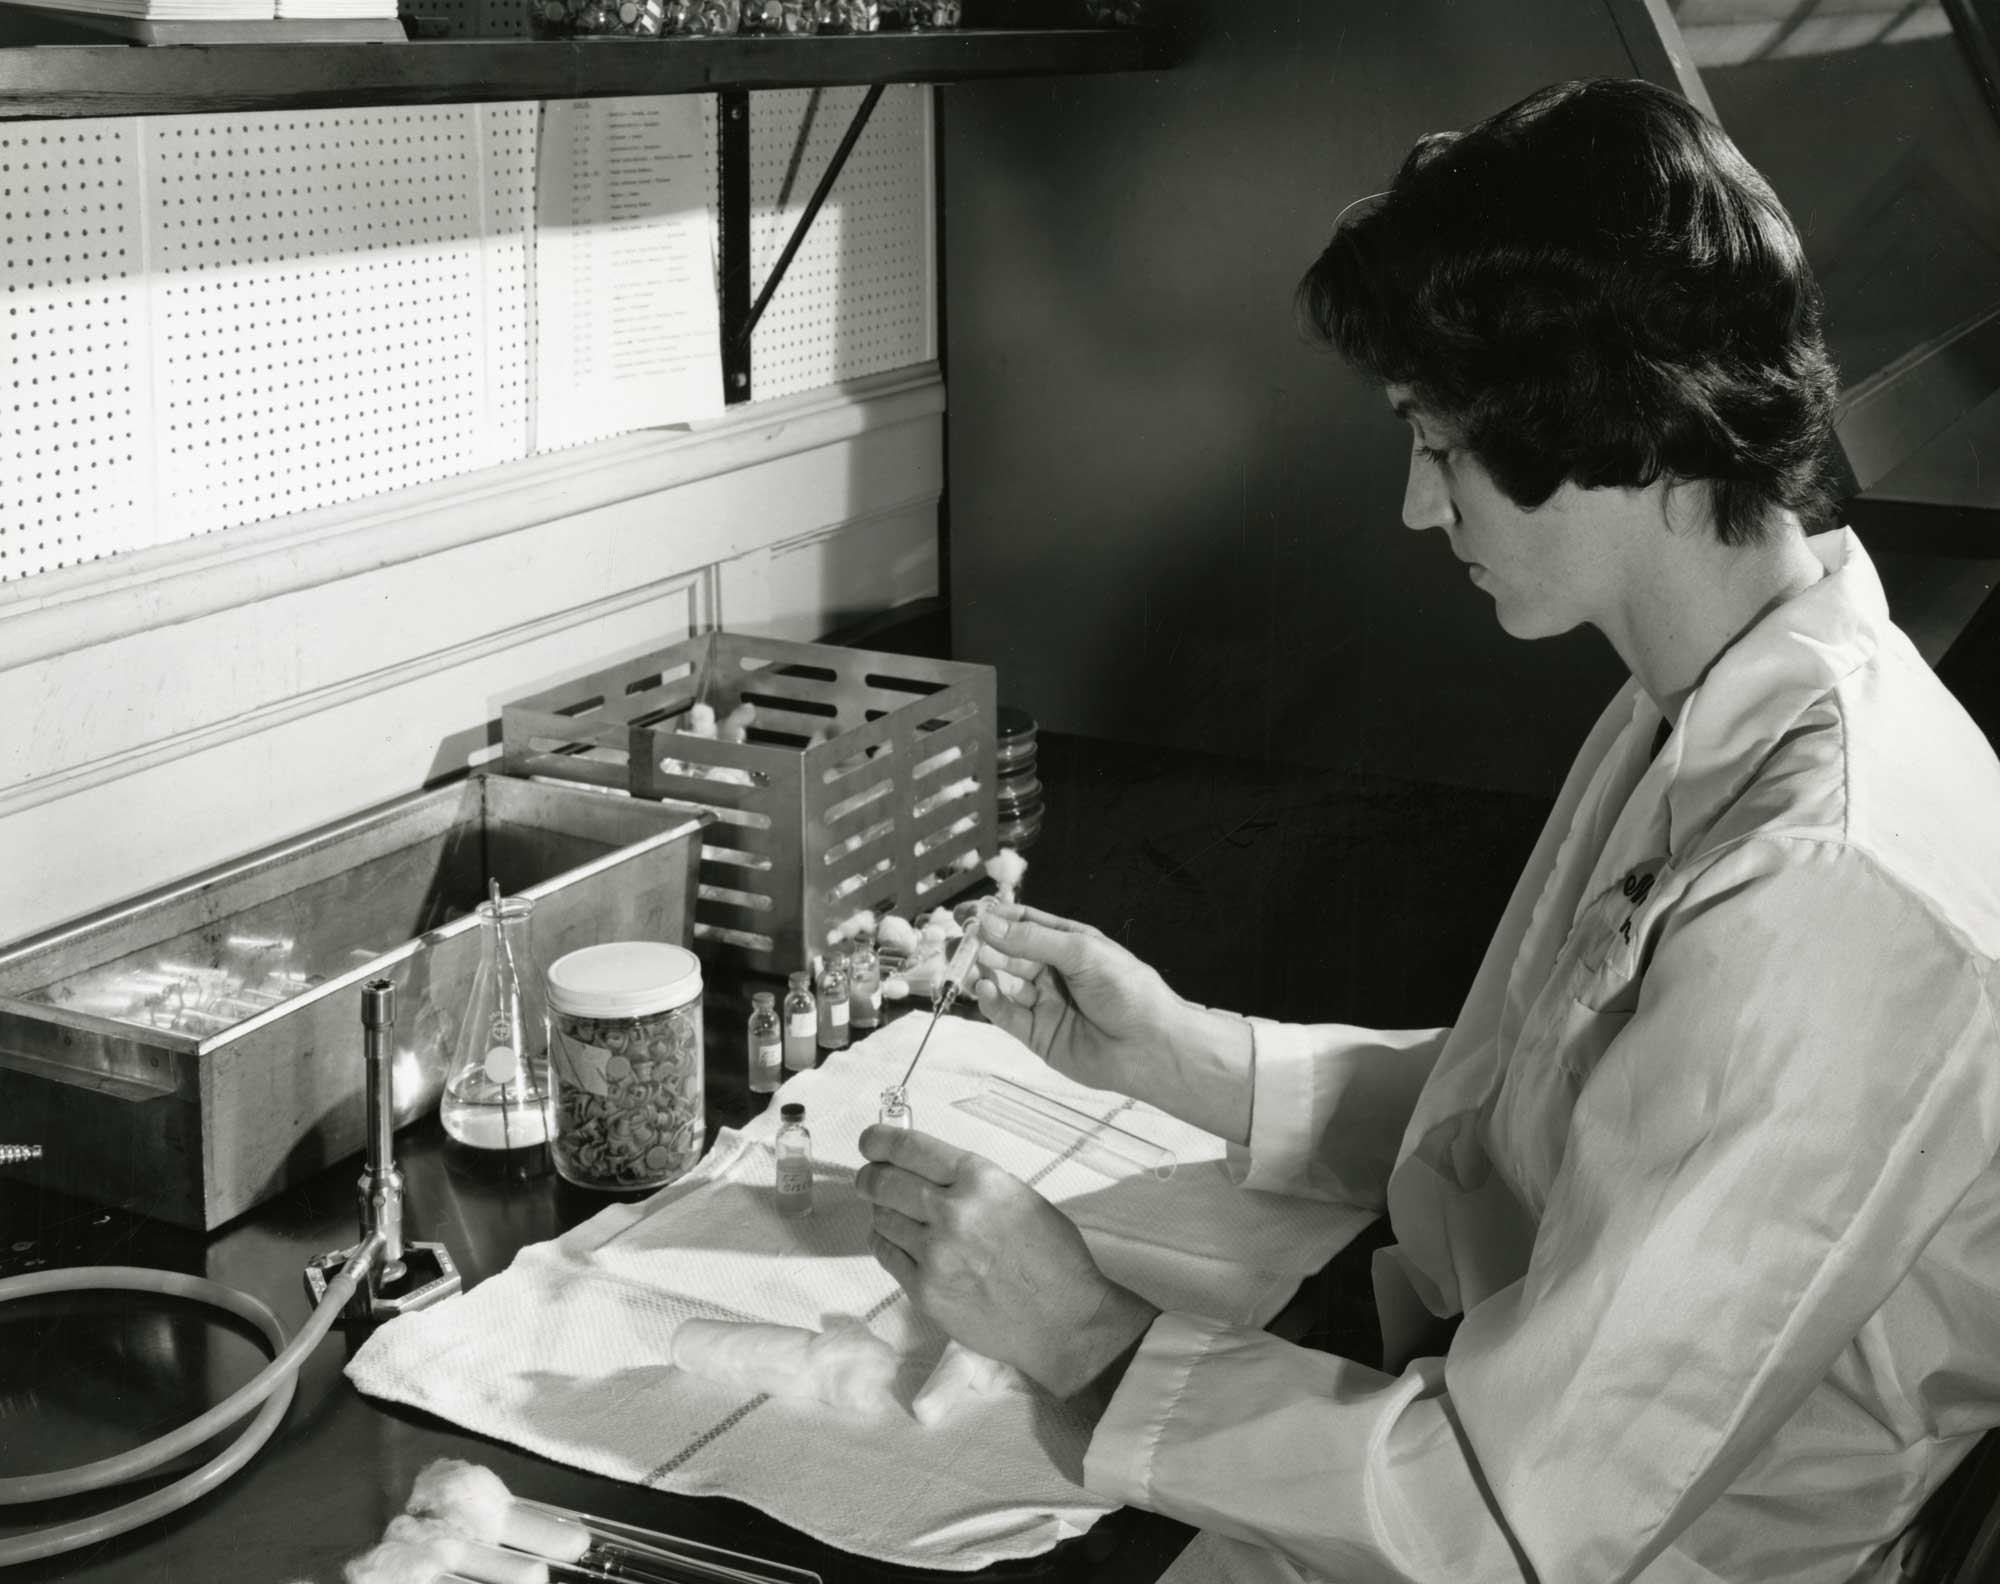 Laboratory Technician. Photograph, mid-20th century. Courtesy U.S. National Library of Medicine.